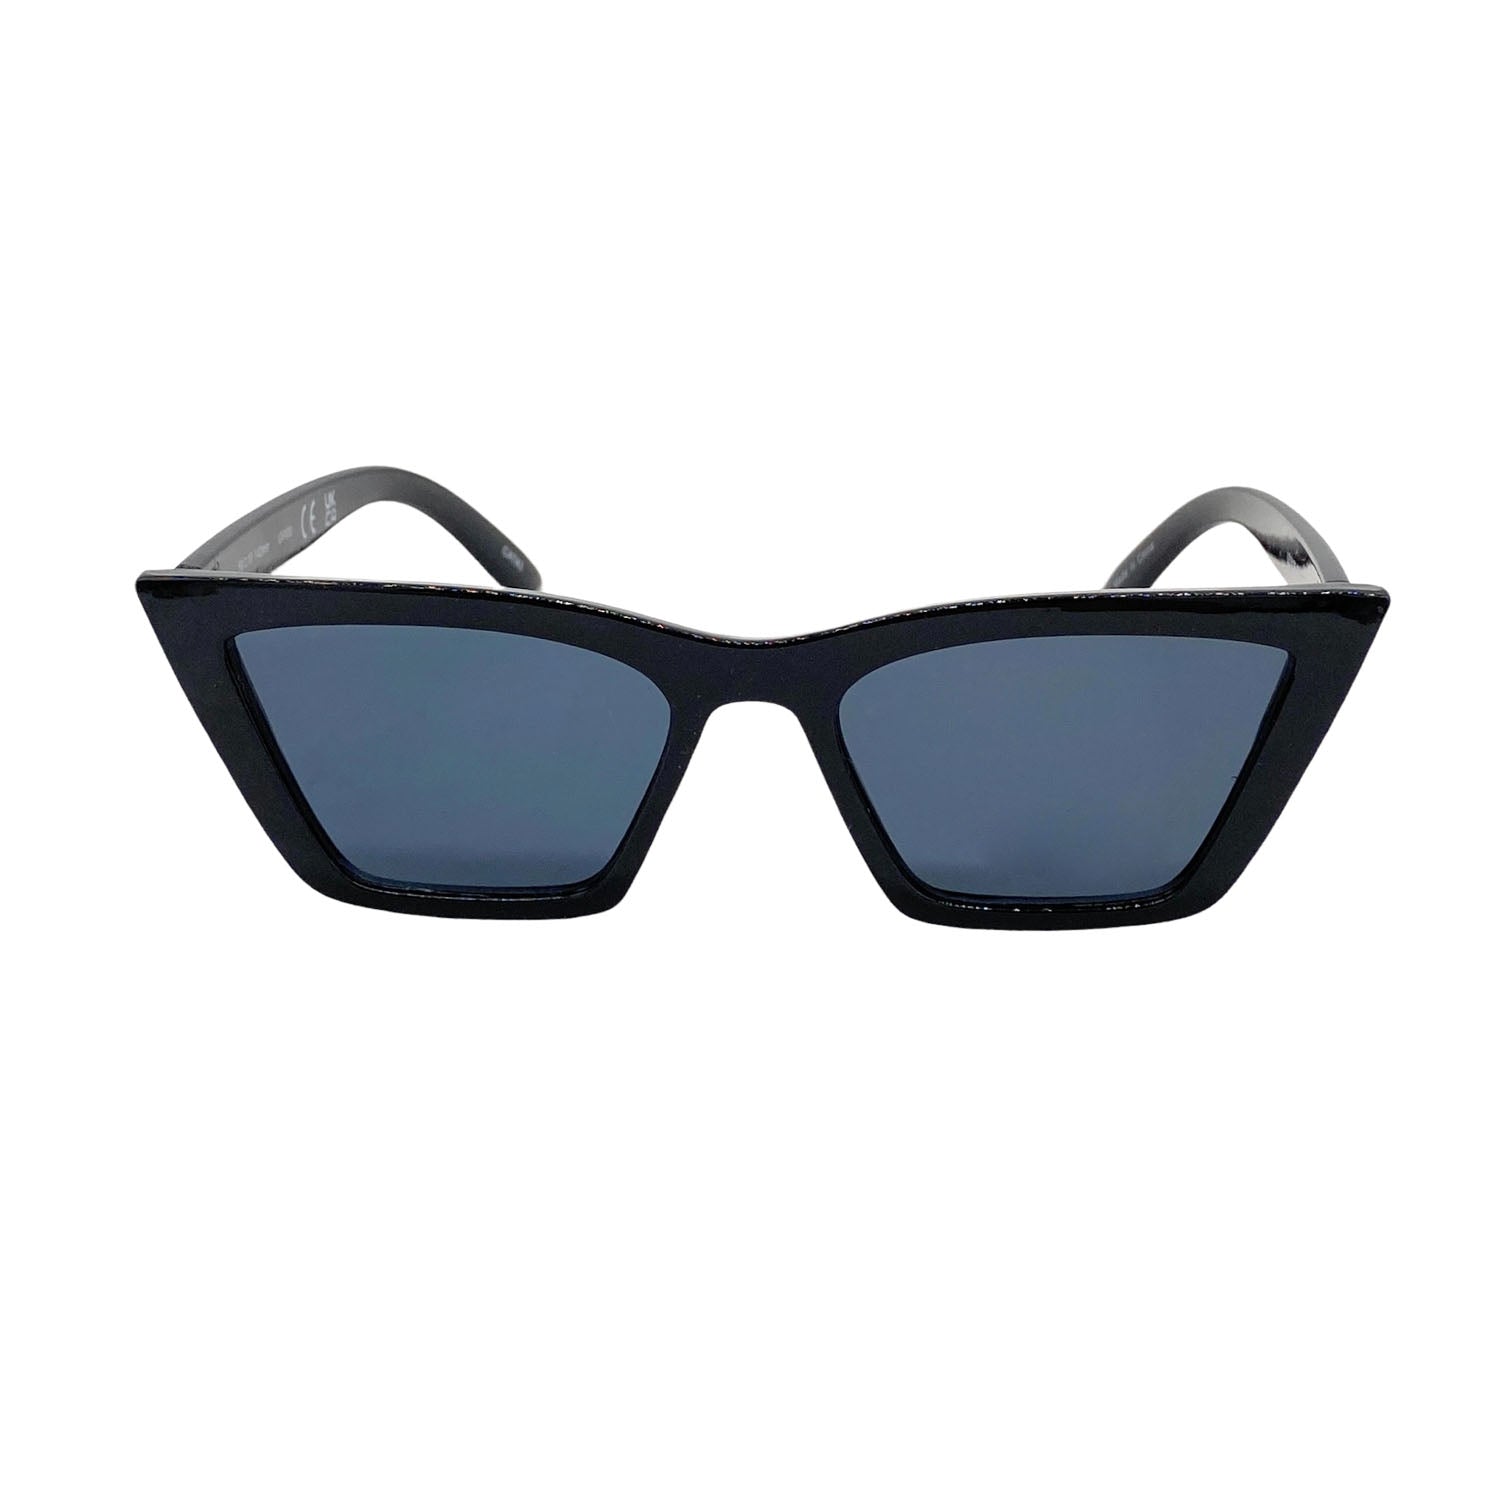 Empire Cove Square Cat Eye Sunglasses Trendy Retro Sunnies Shades UV Protection